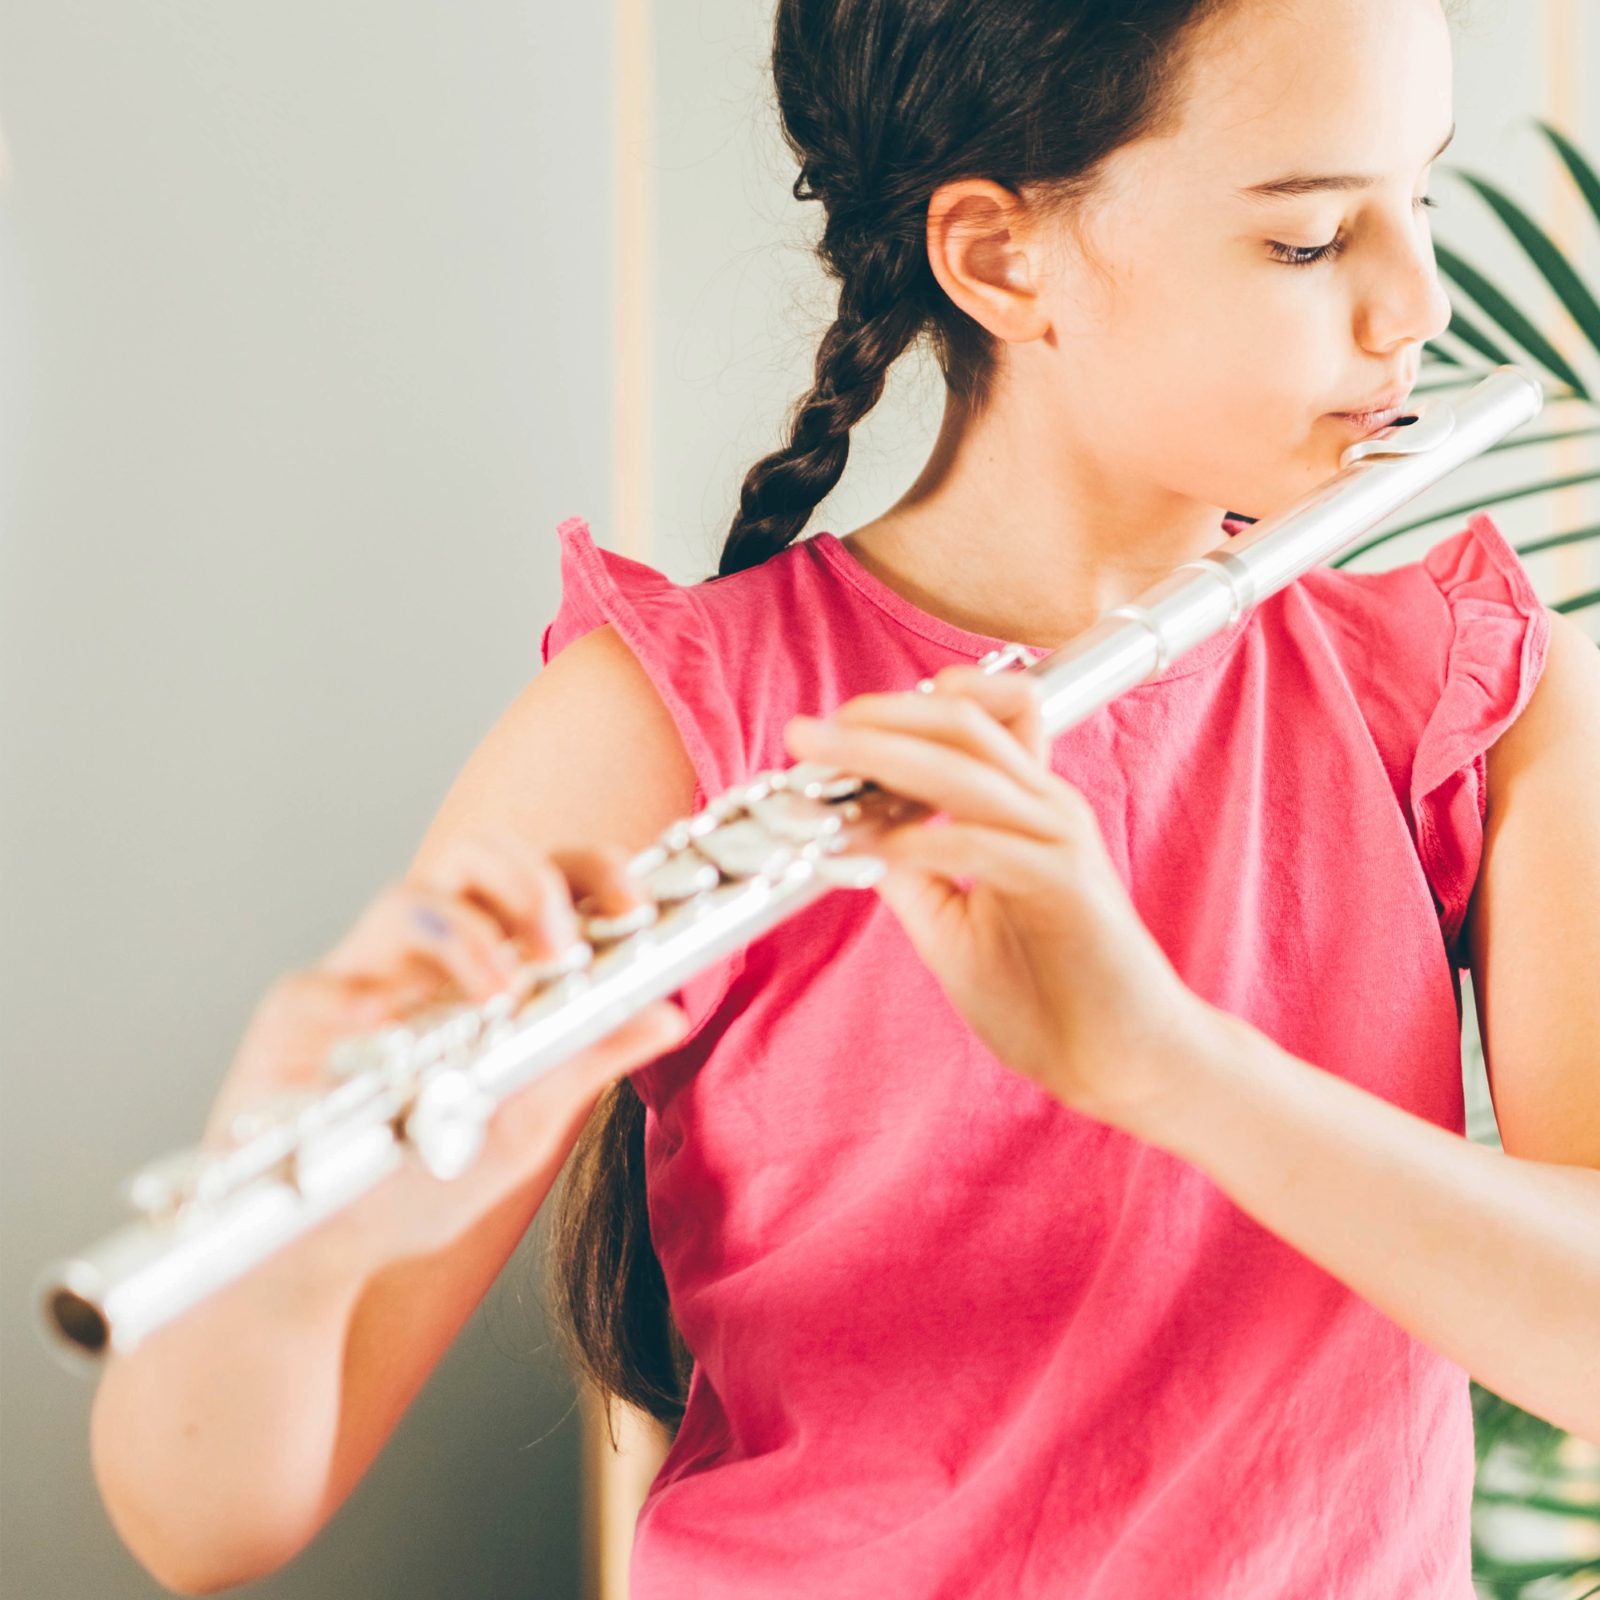 Flute lesson for children 40 minutes : photo 1